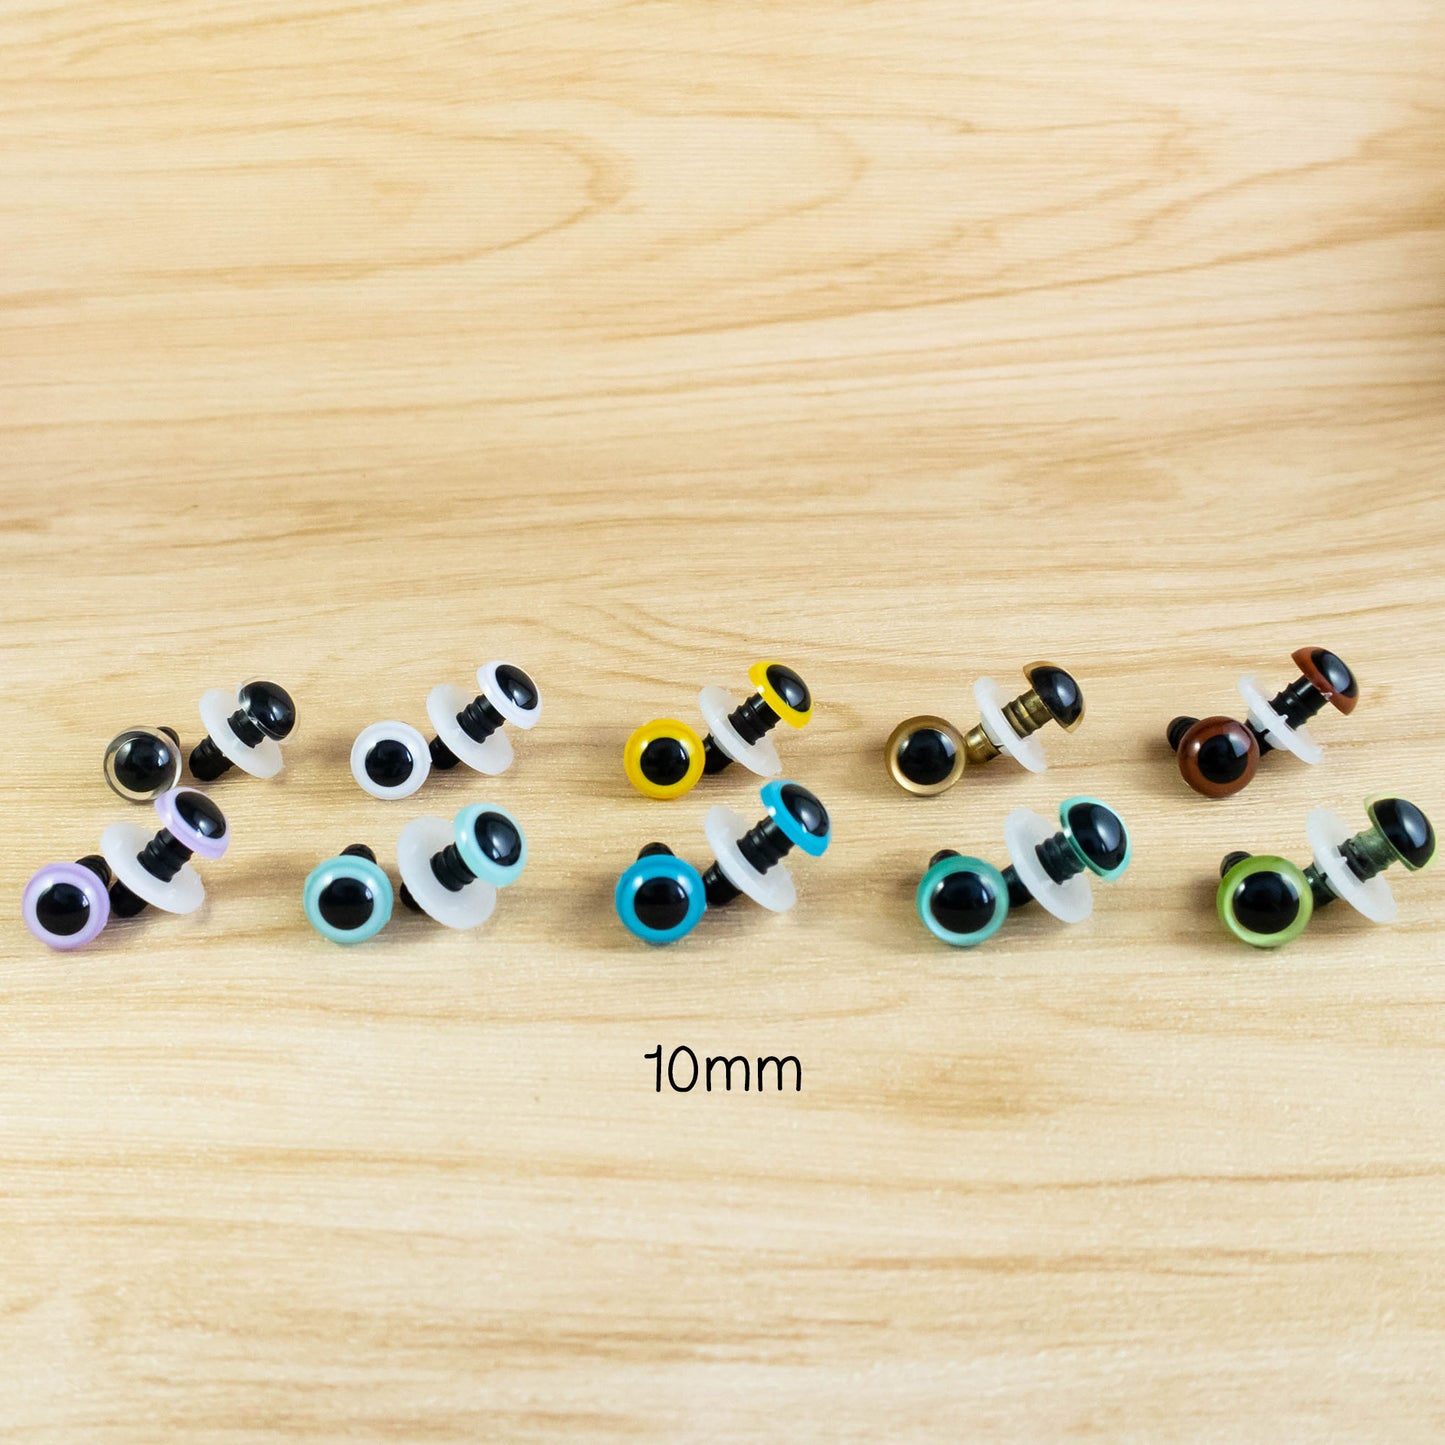 8mm colour toys eyes for amigurumi